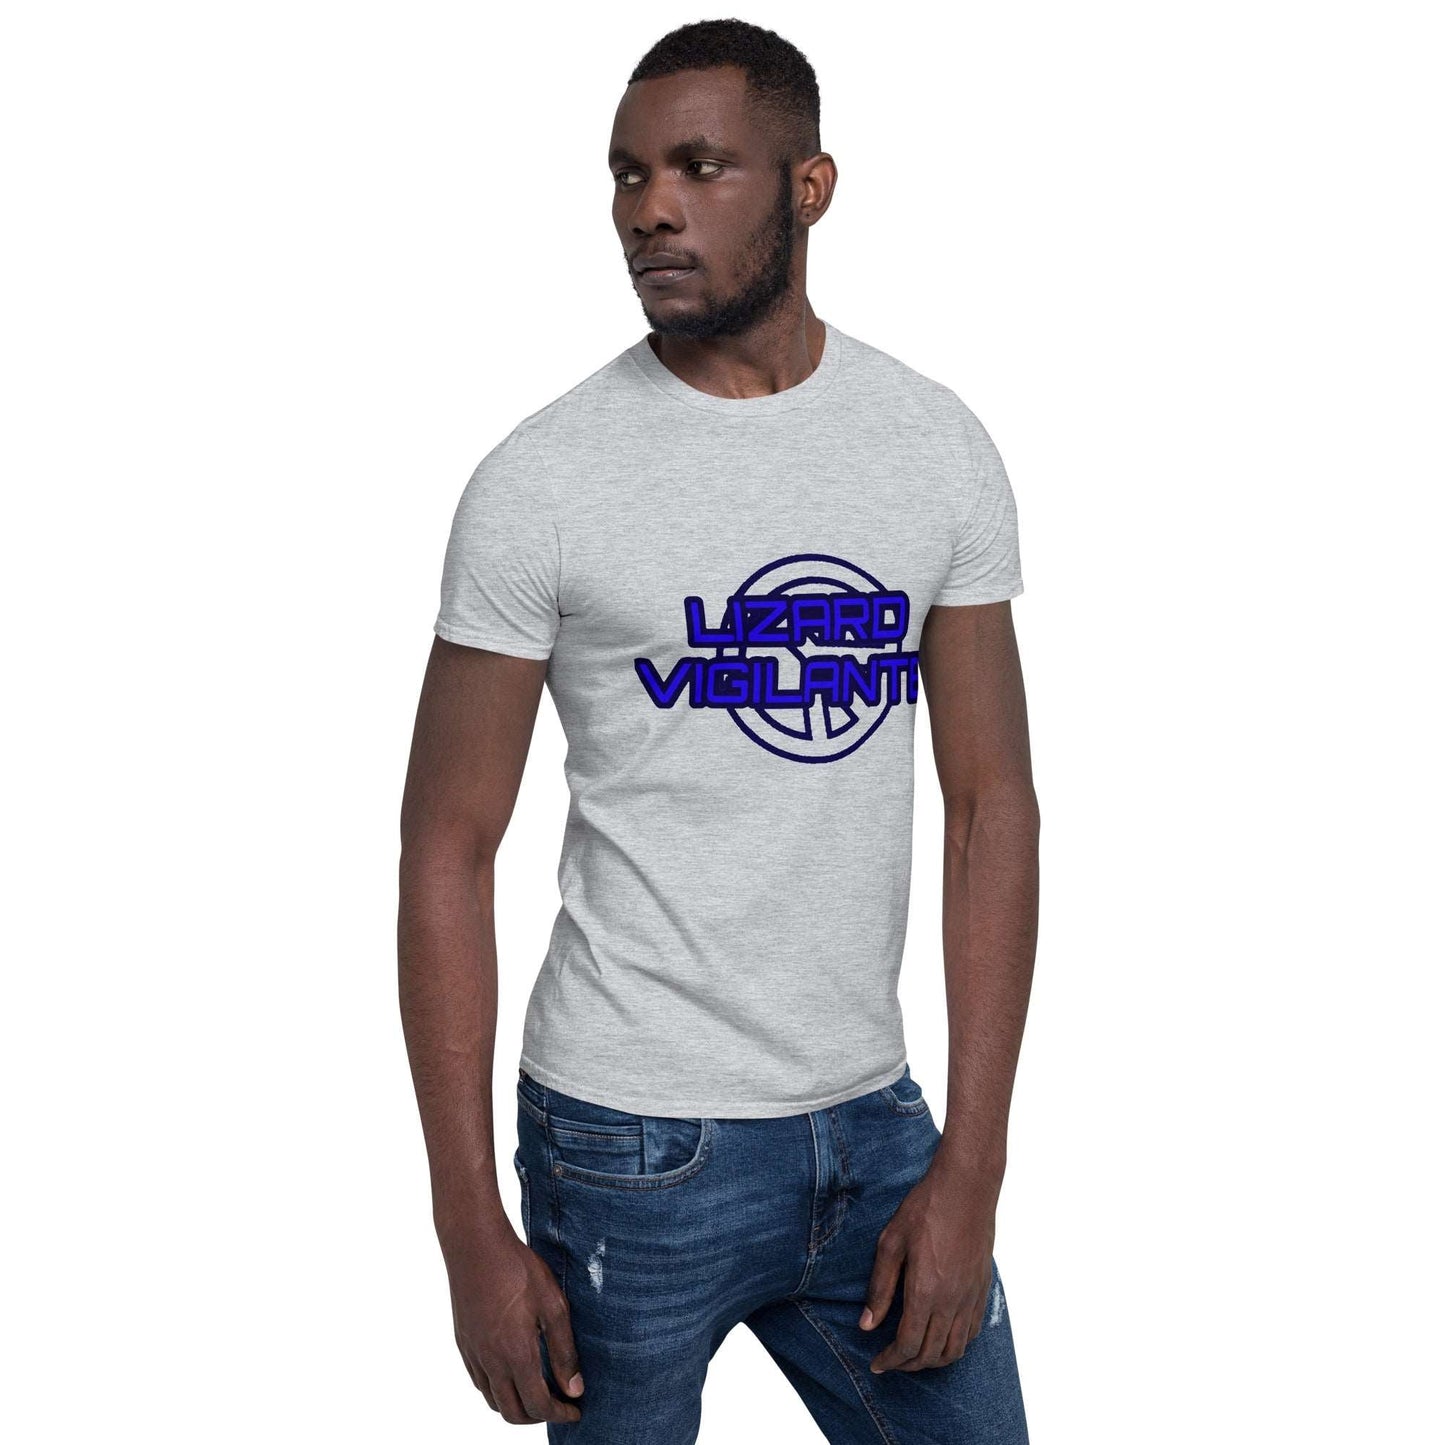 Blue Lizard Crooked Peace Short-Sleeve Unisex T-Shirt - Lizard Vigilante